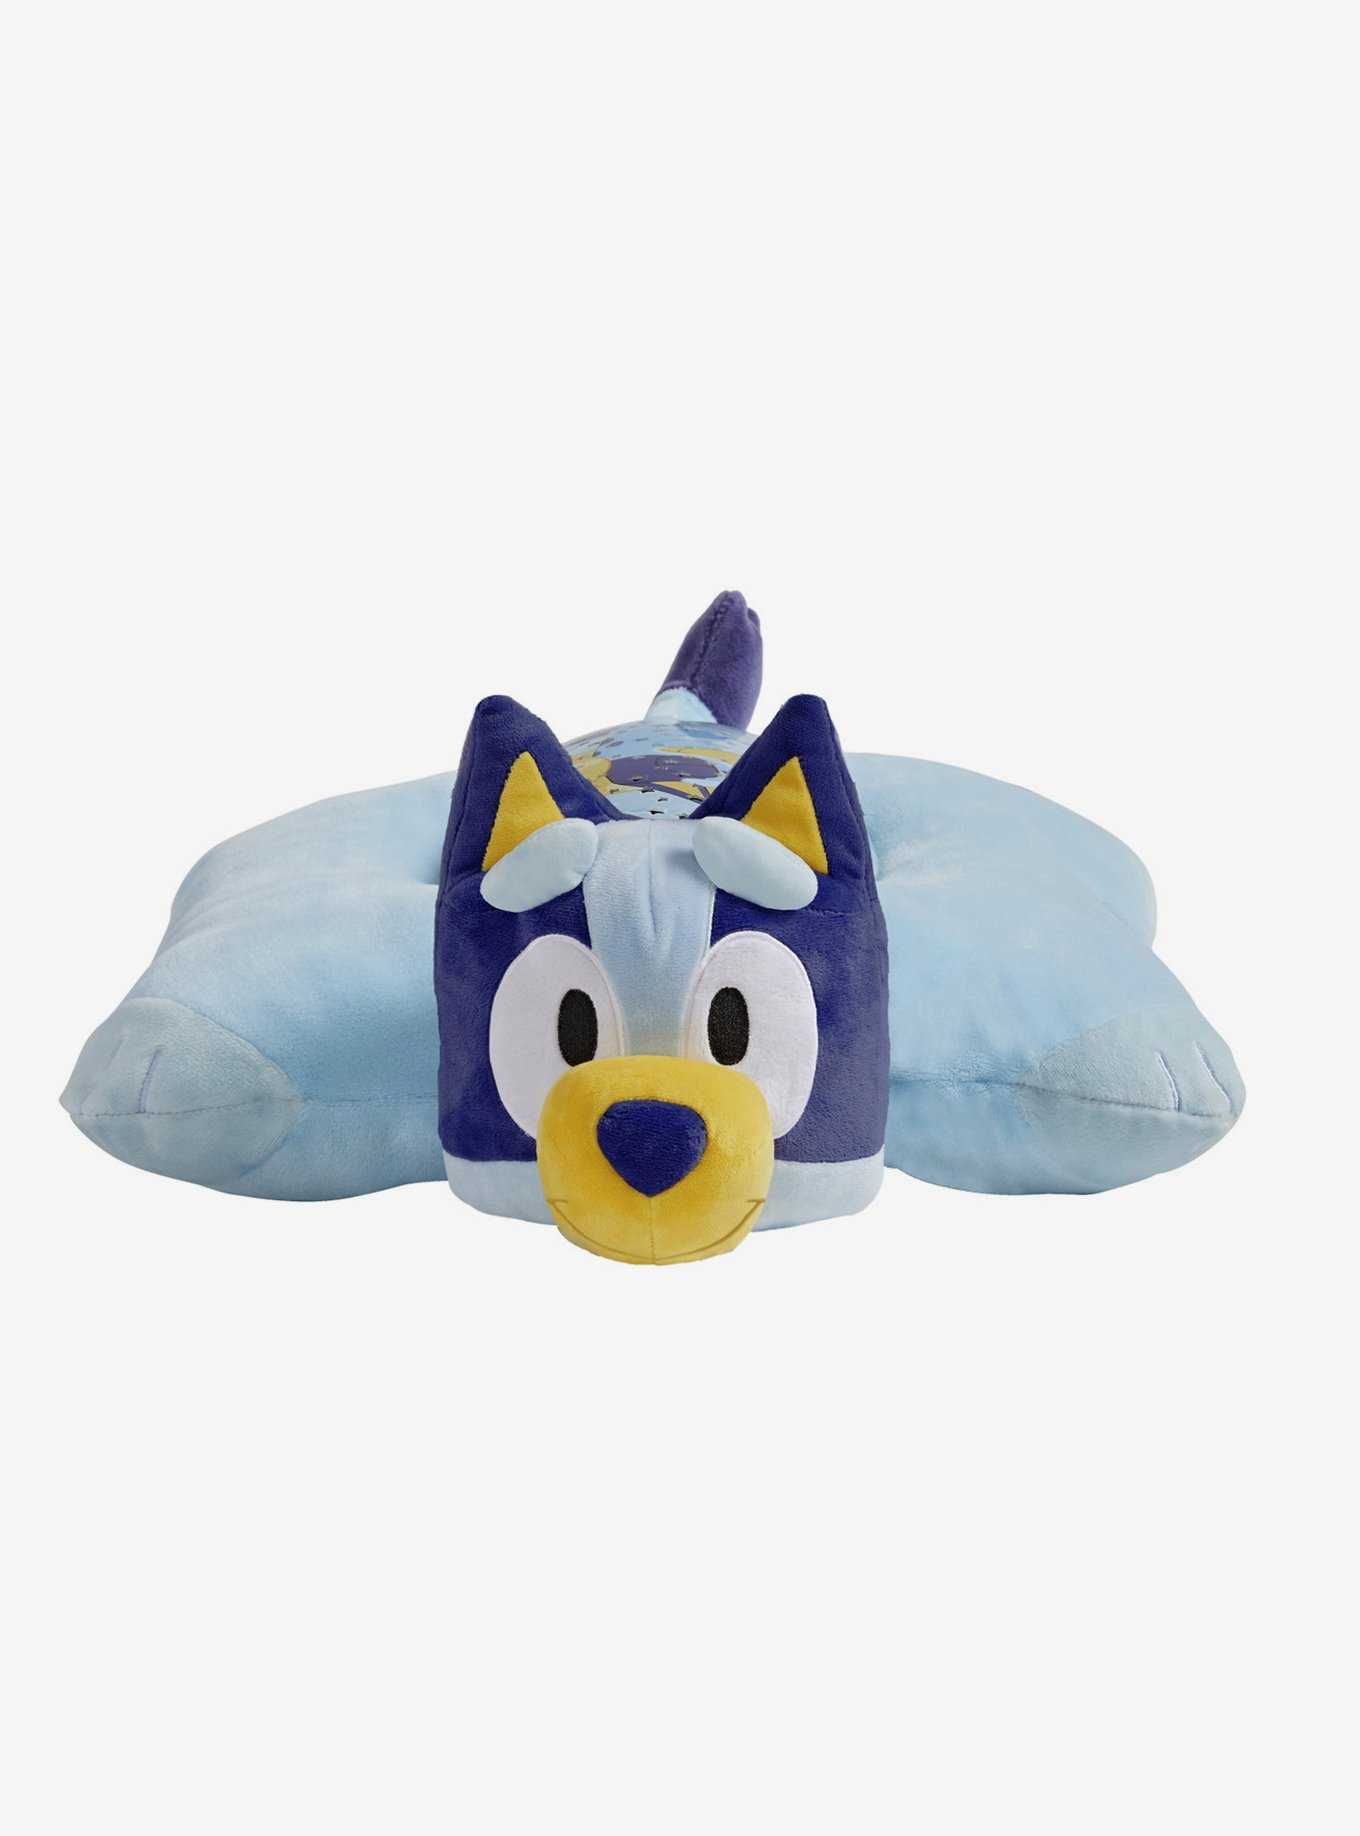 Bluey Sleeptime Lite Pillow Pet, , hi-res